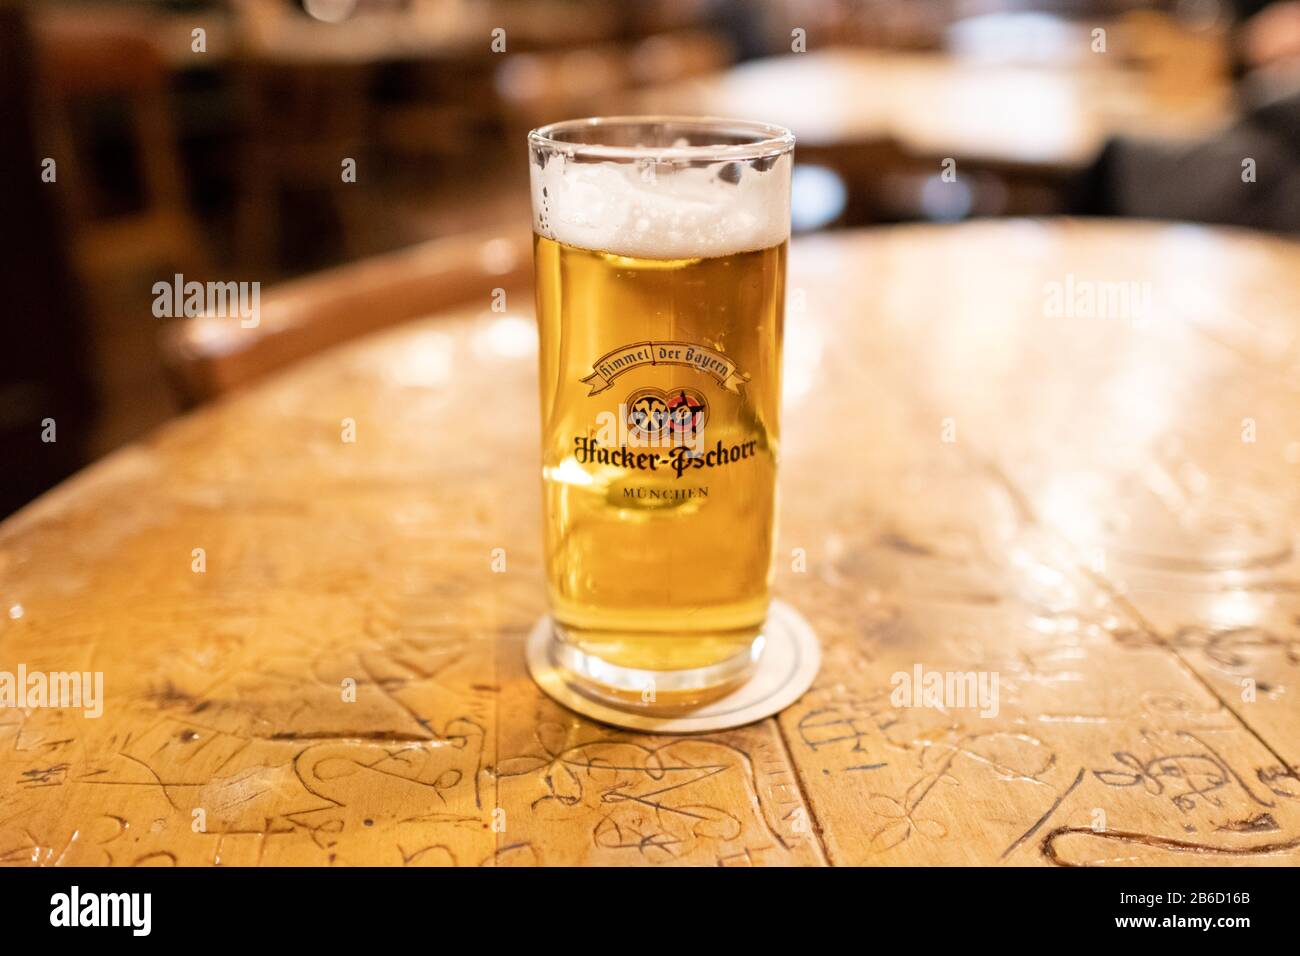 Hacker-Pschorr weisse beer at Schnookeloch hotel bar, Heidelberg, Germany Stock Photo